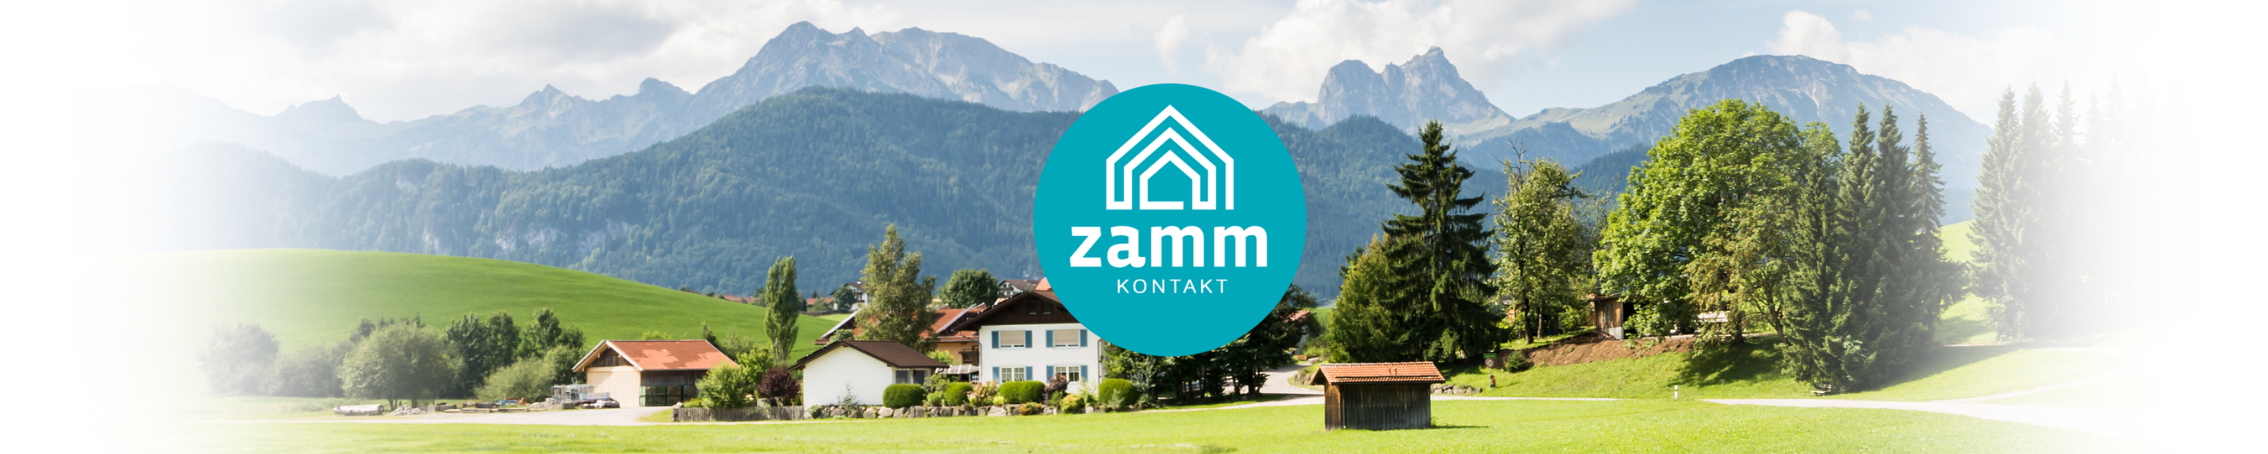 zamm Immobilien GmbH